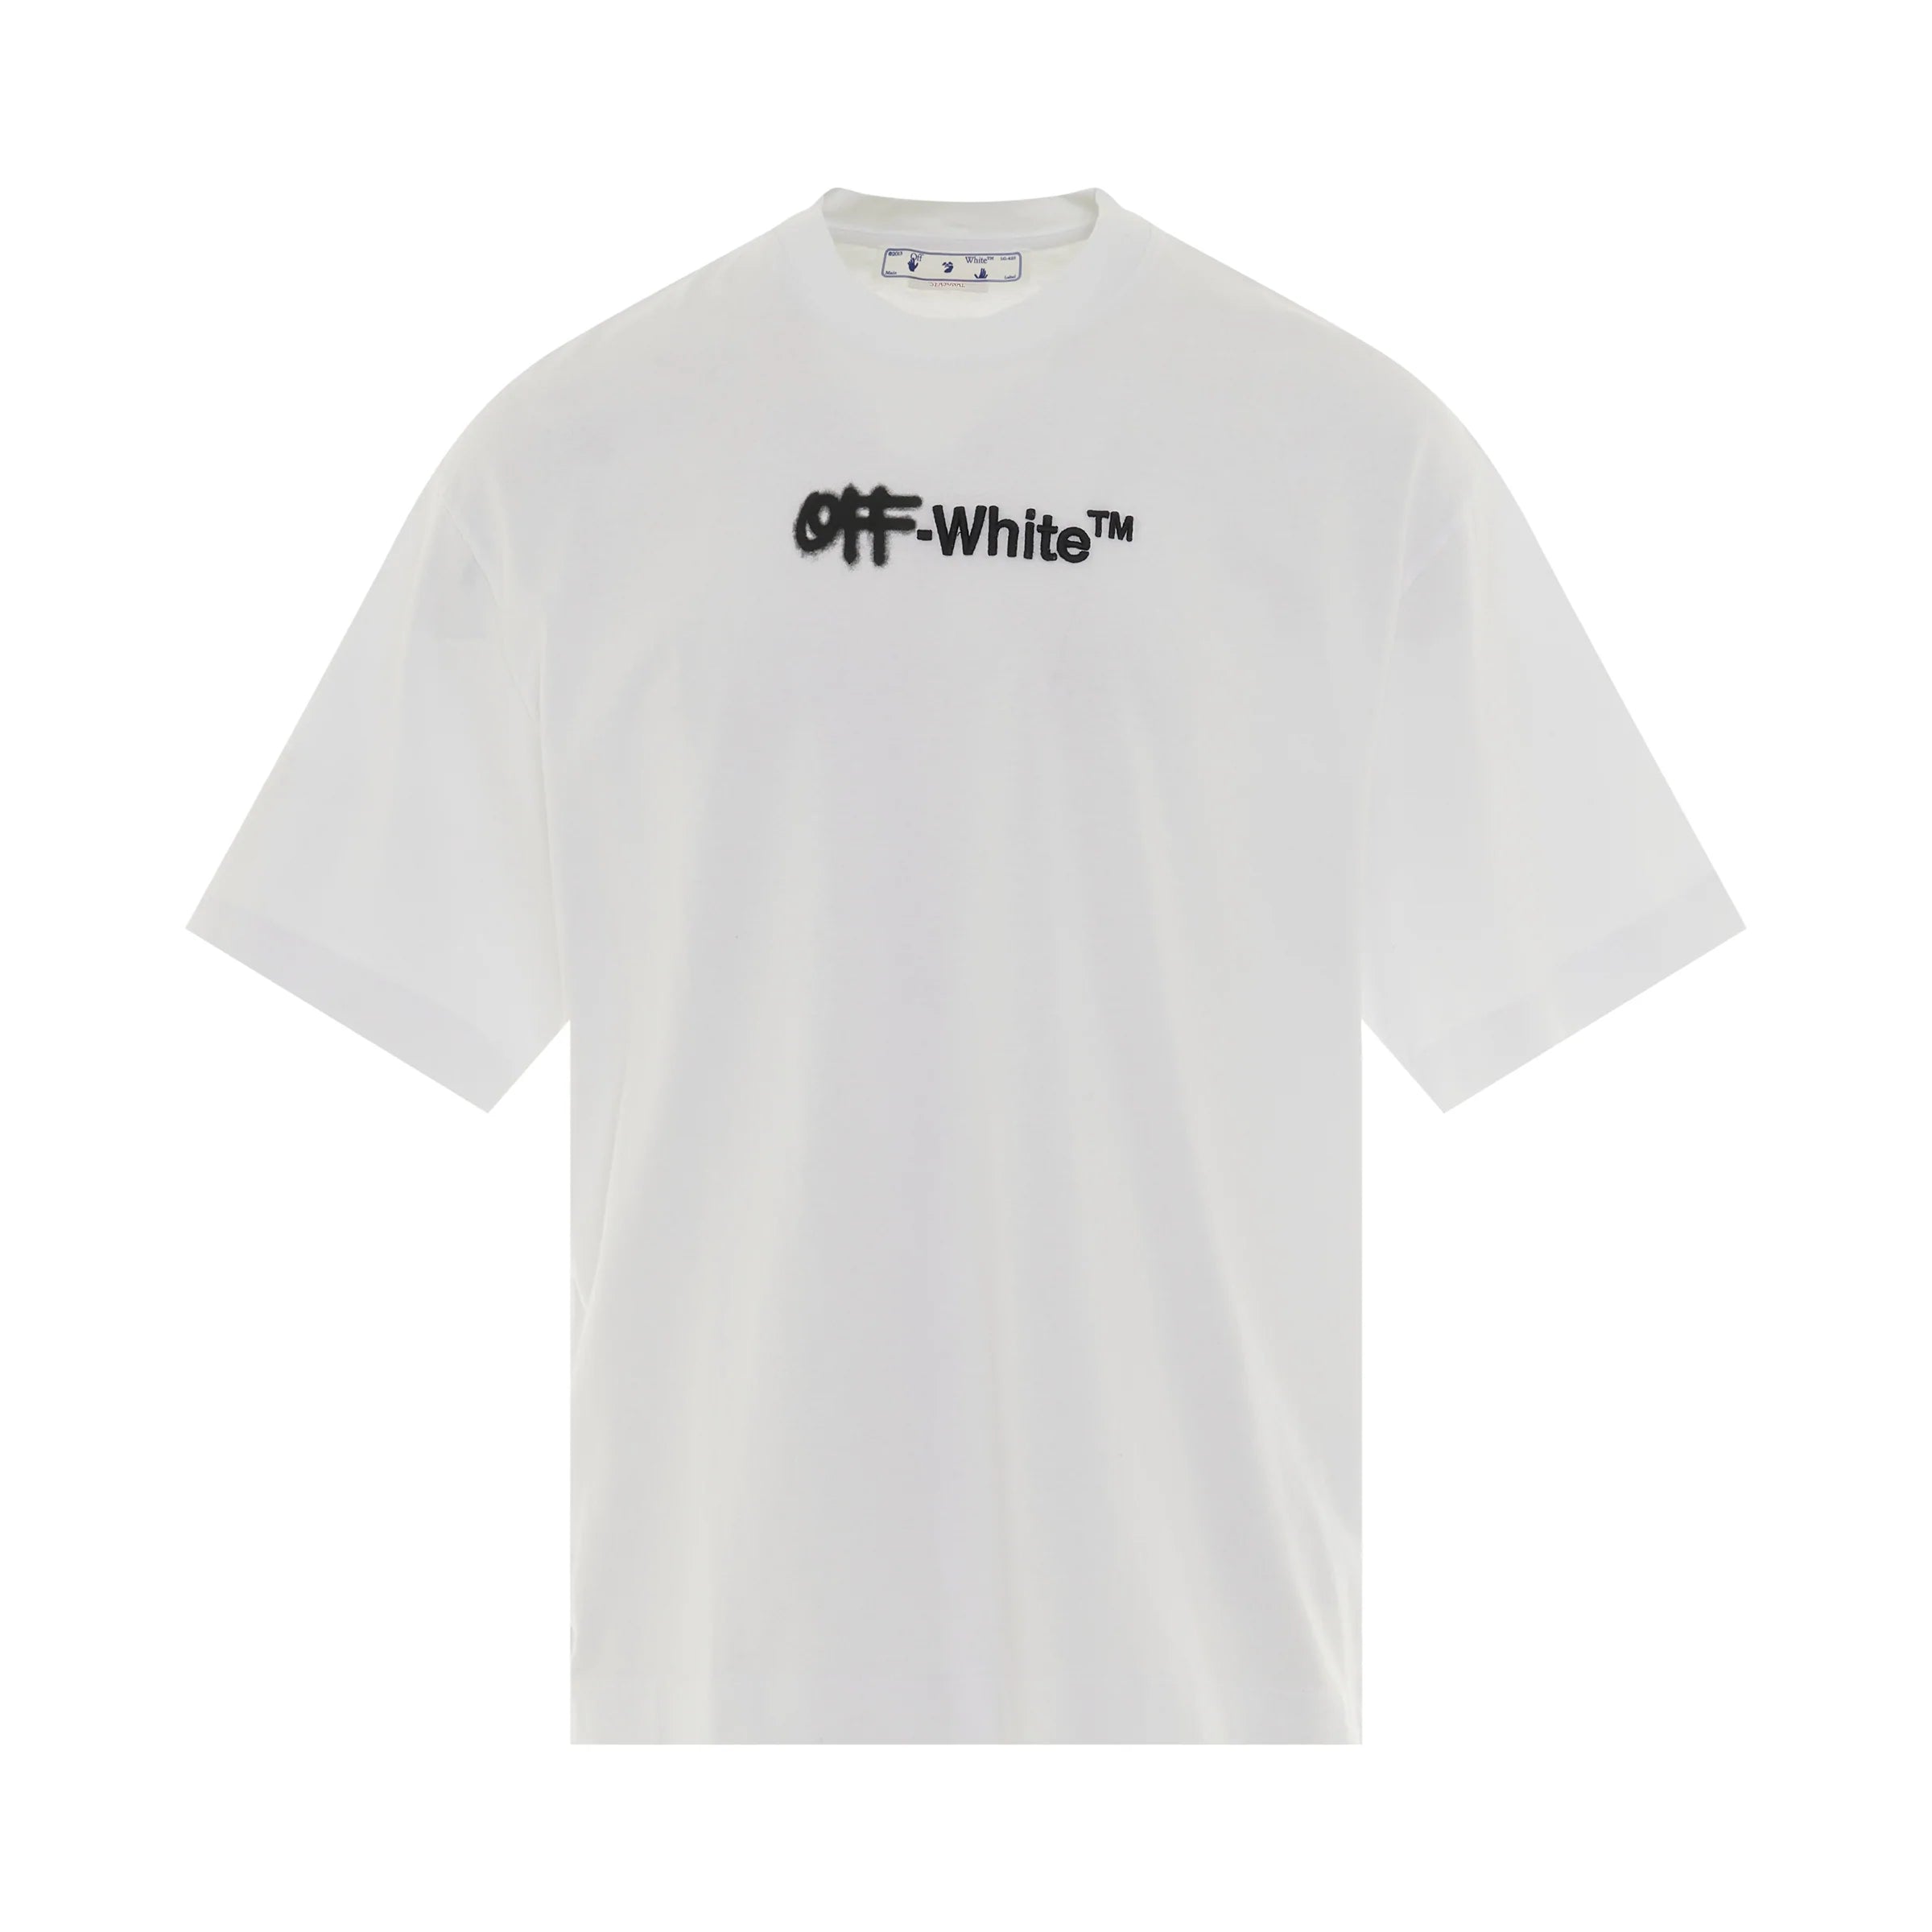 Off-White - Spray Helvetica O/S Skate T-Shirt